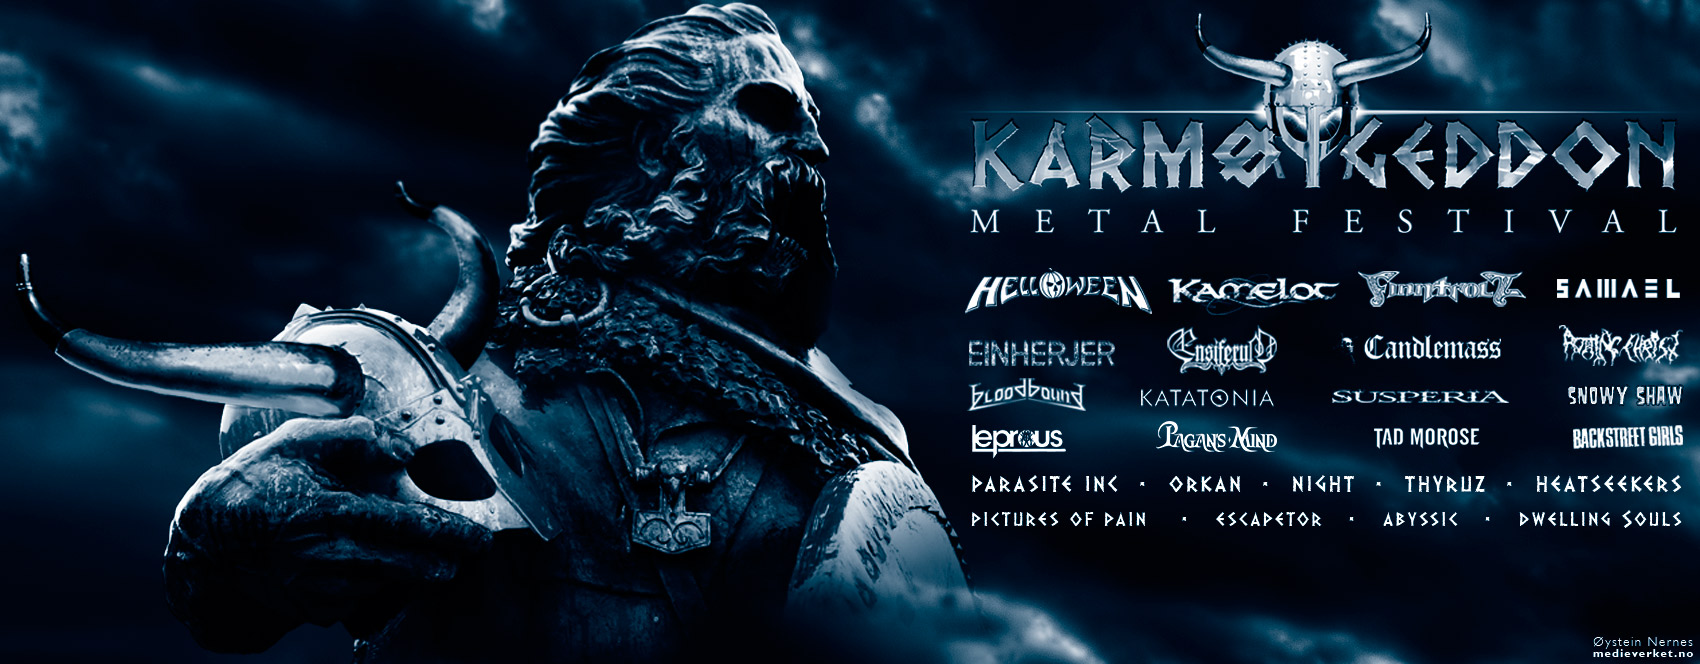 Karmøygeddon Metal Festival 2016 - All Metal Festivals